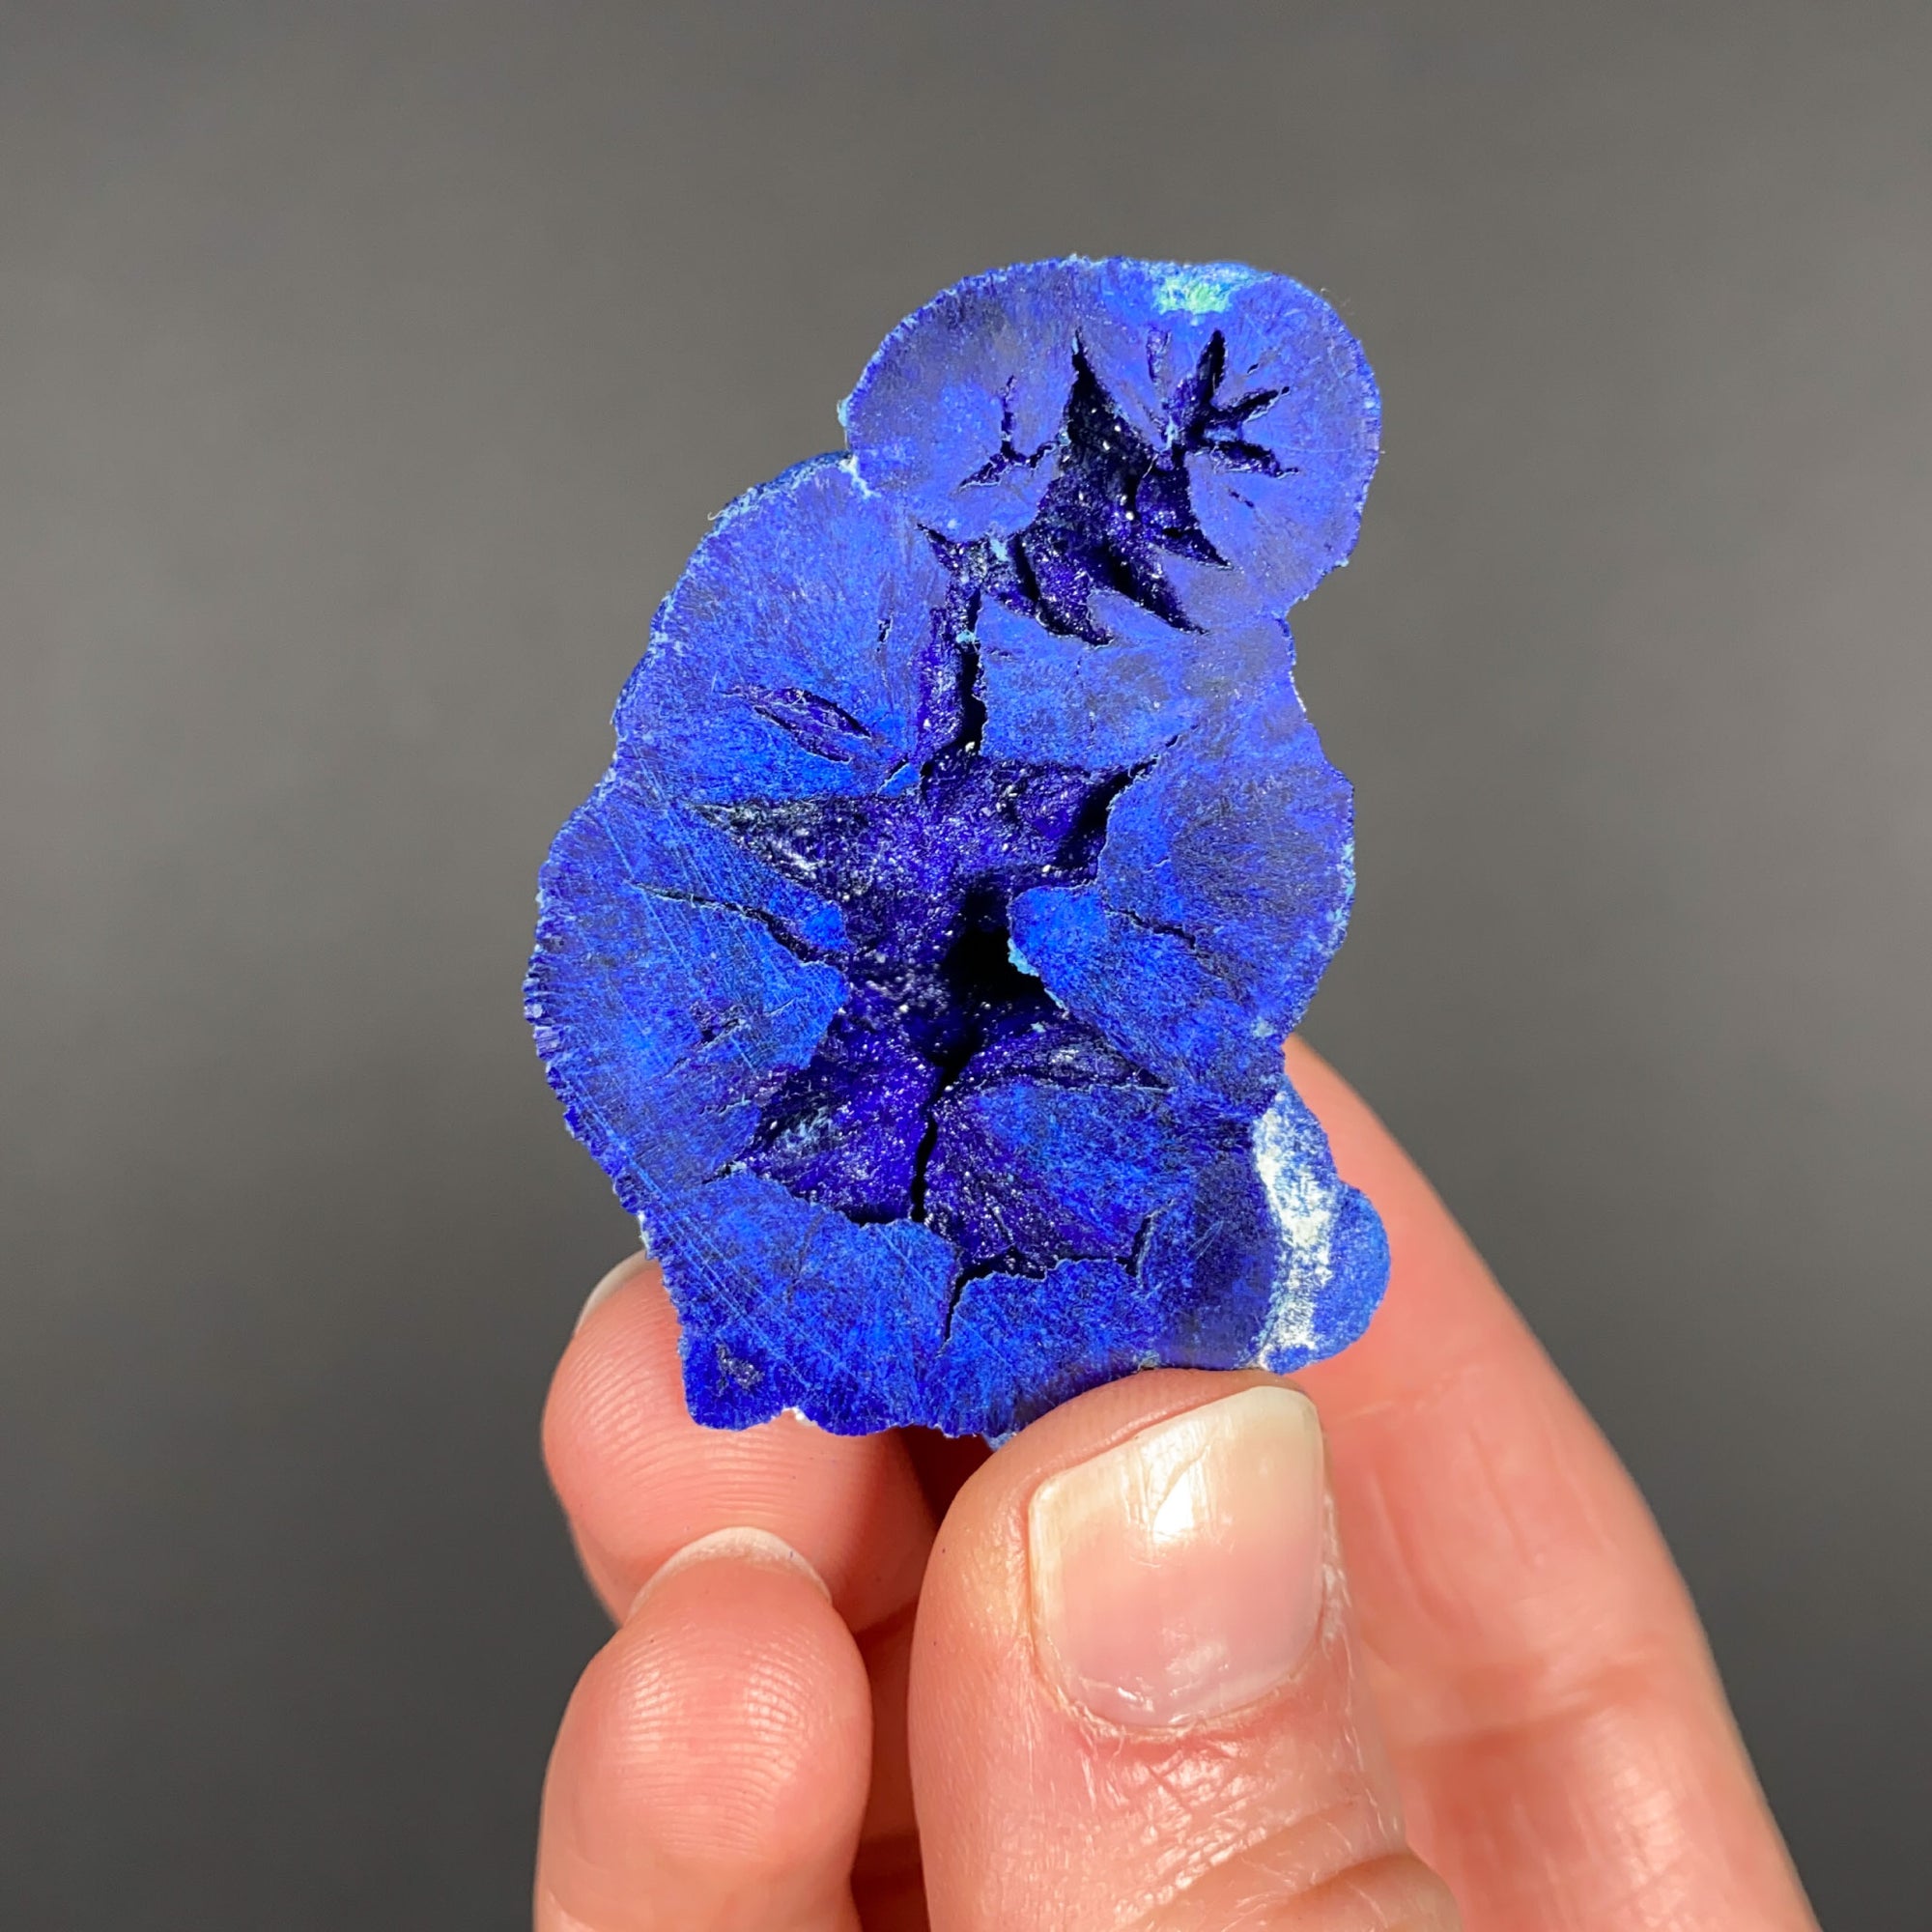 Azurite Nodule Cut Open To Show Blue Crystals Inside